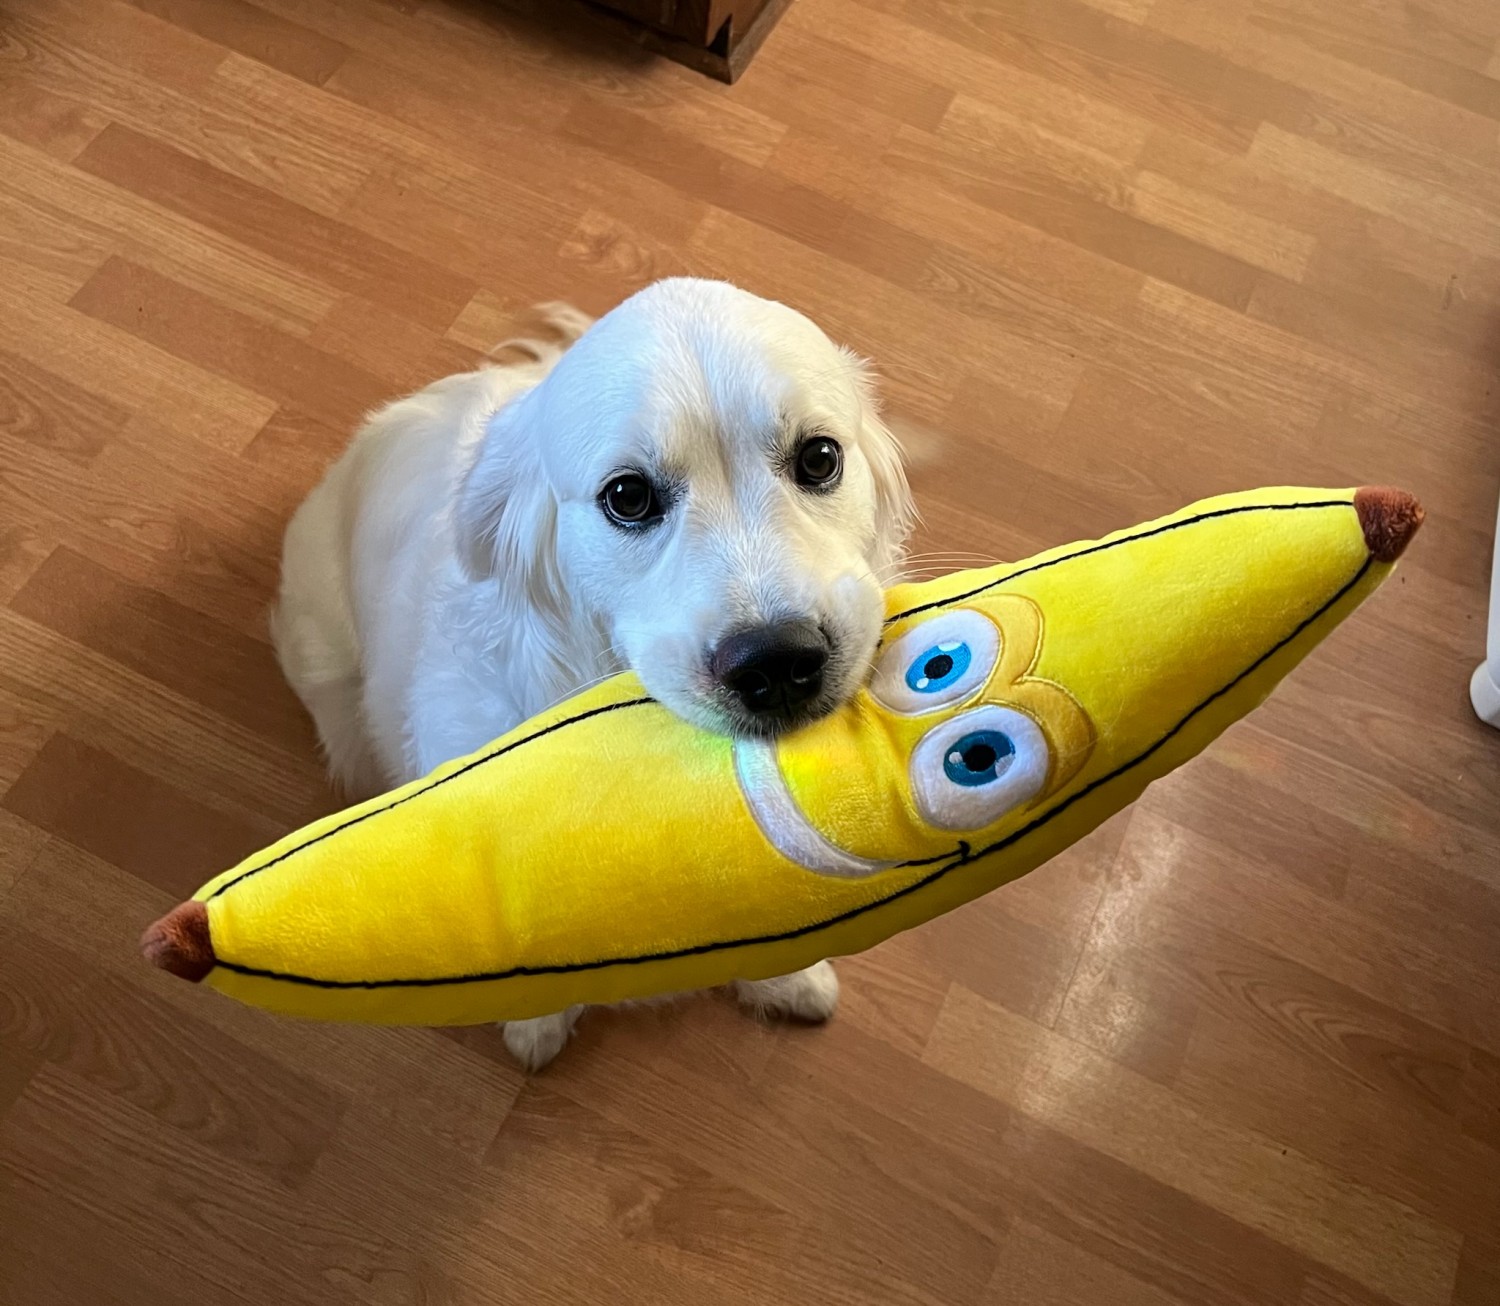 Dog with Banana Toy